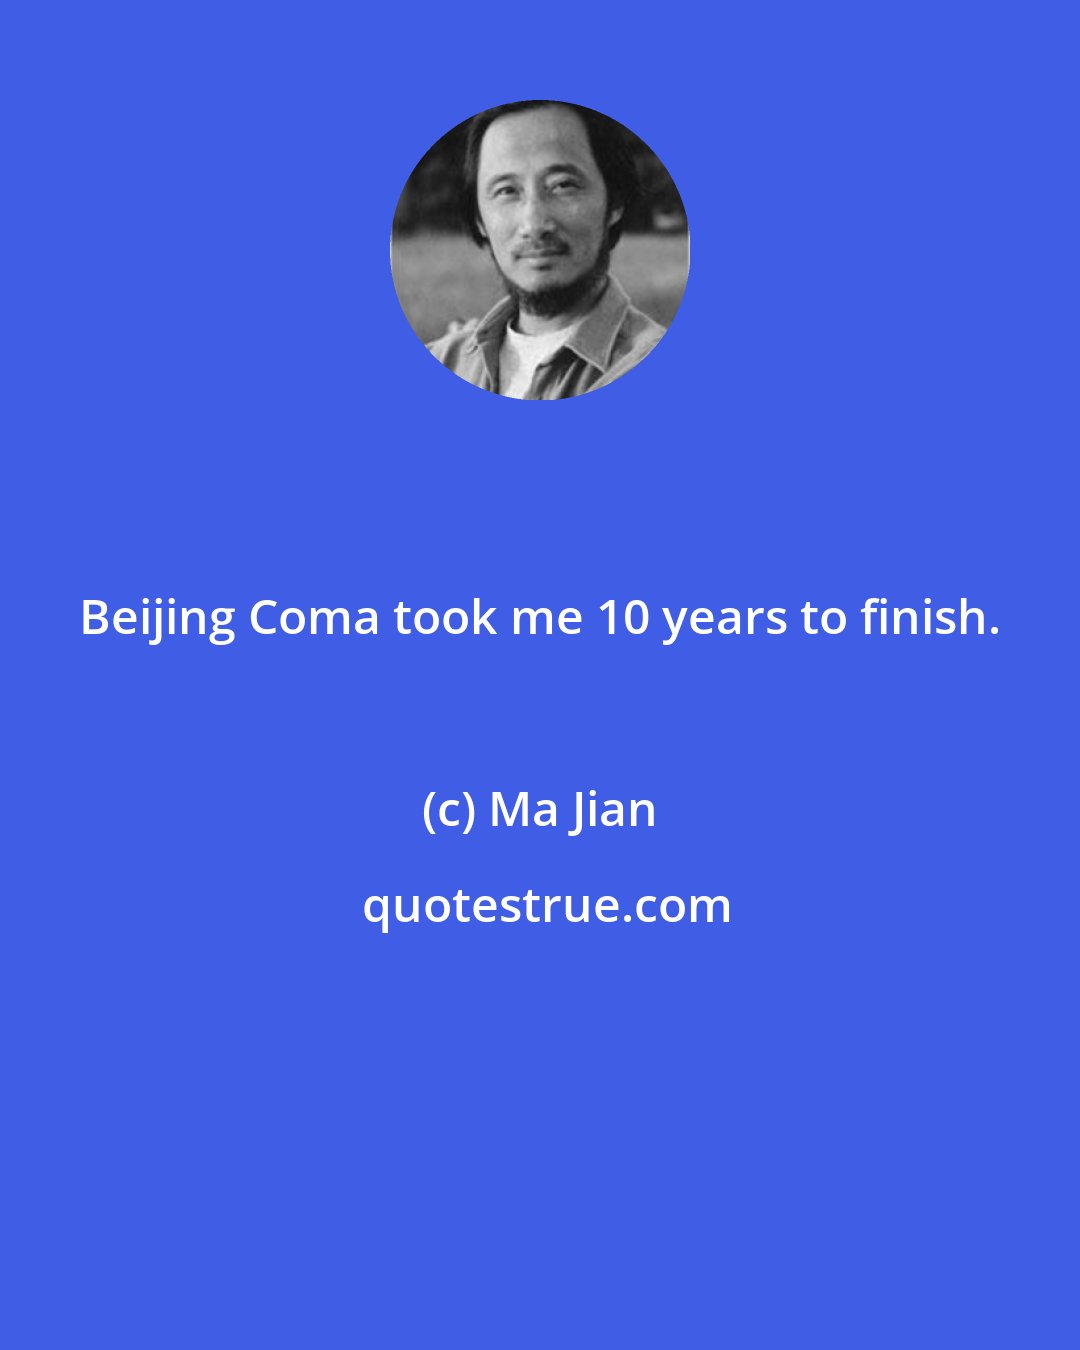 Ma Jian: Beijing Coma took me 10 years to finish.